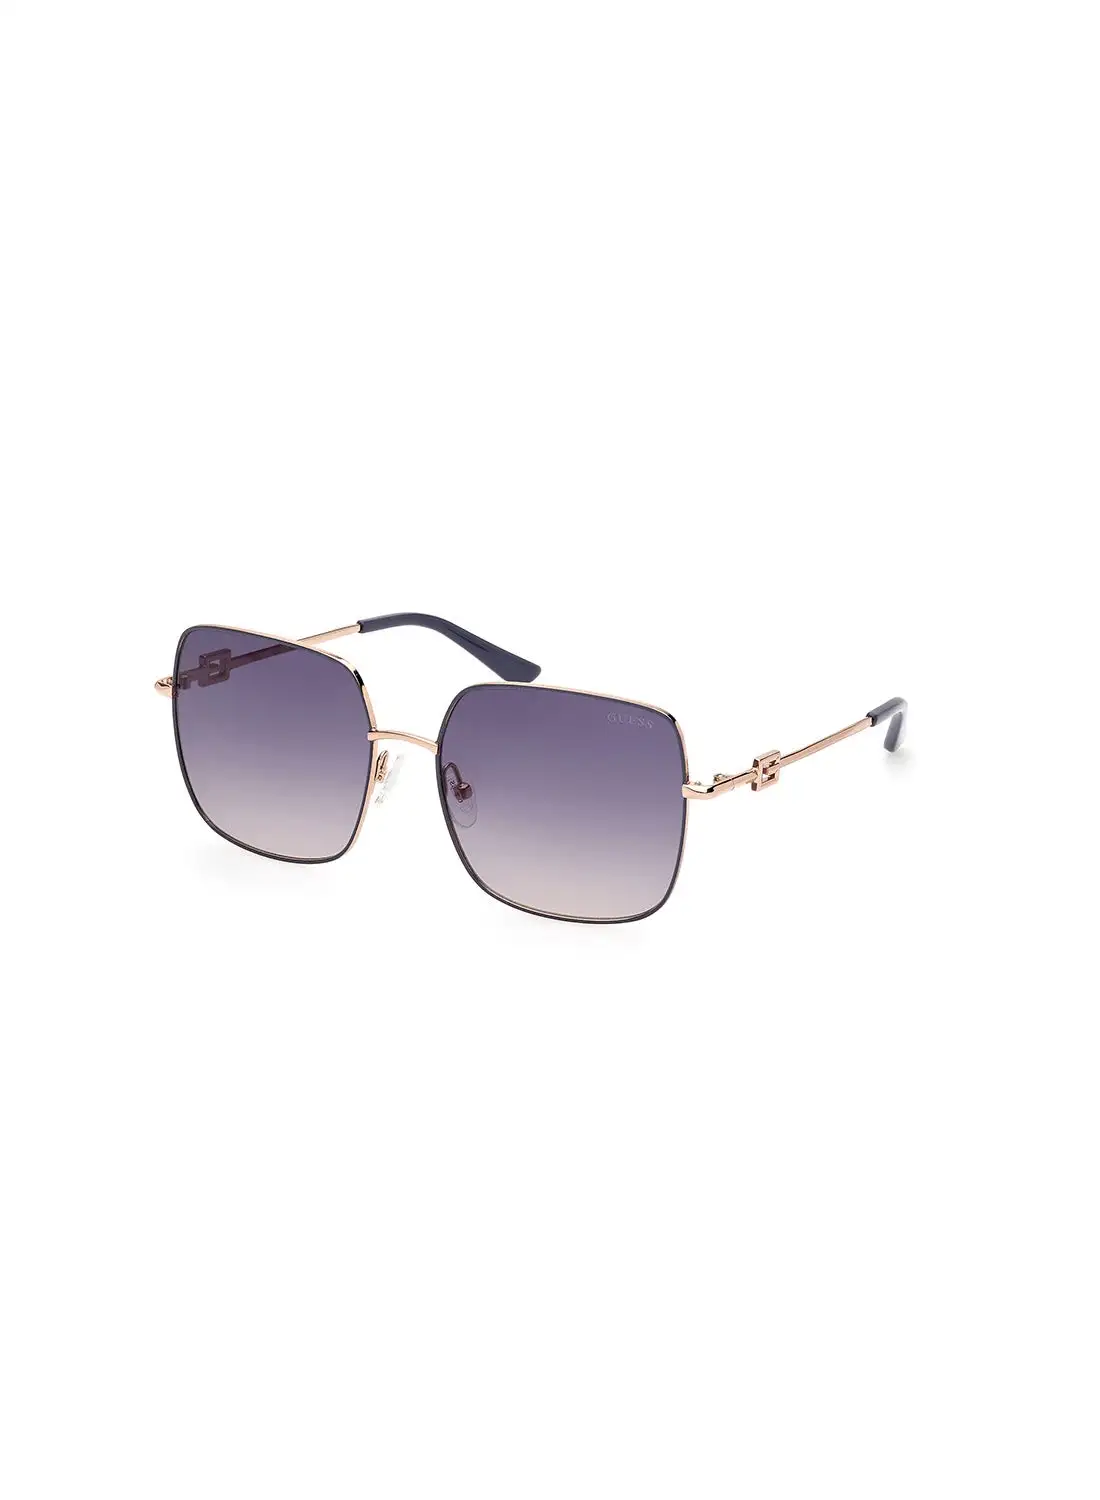 GUESS Women's UV Protection Square Sunglasses - GU7906-H20B58 - Lens Size: 58 Mm